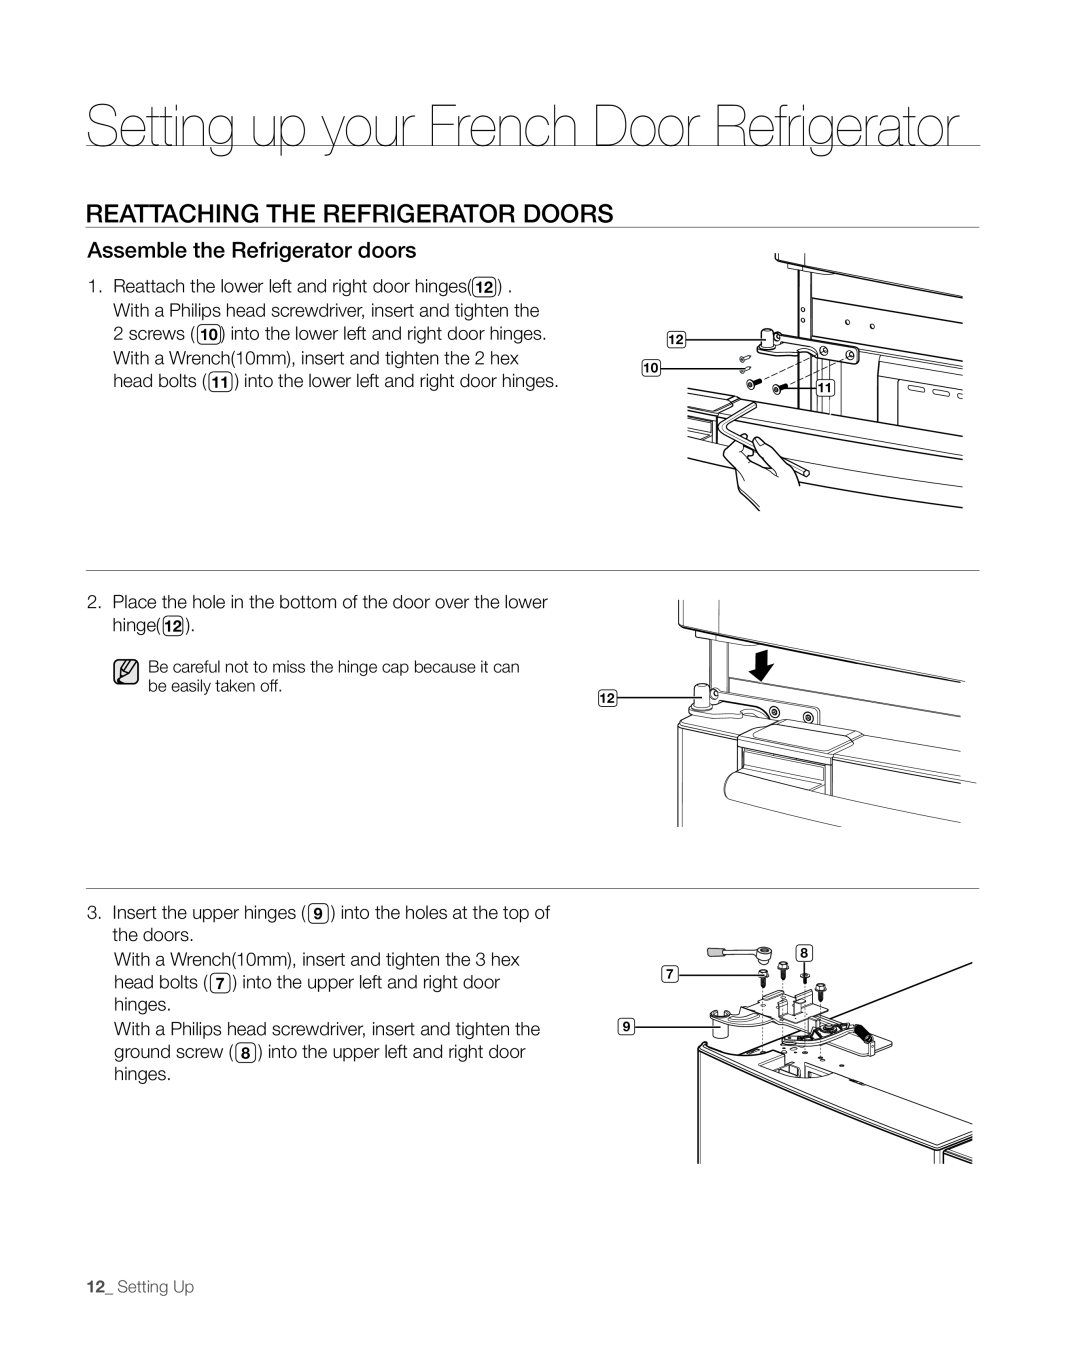 Sears RFG297AA manual REAttACHinG tHE REFRiGERAtoR DooRs, Assemble the Refrigerator doors 